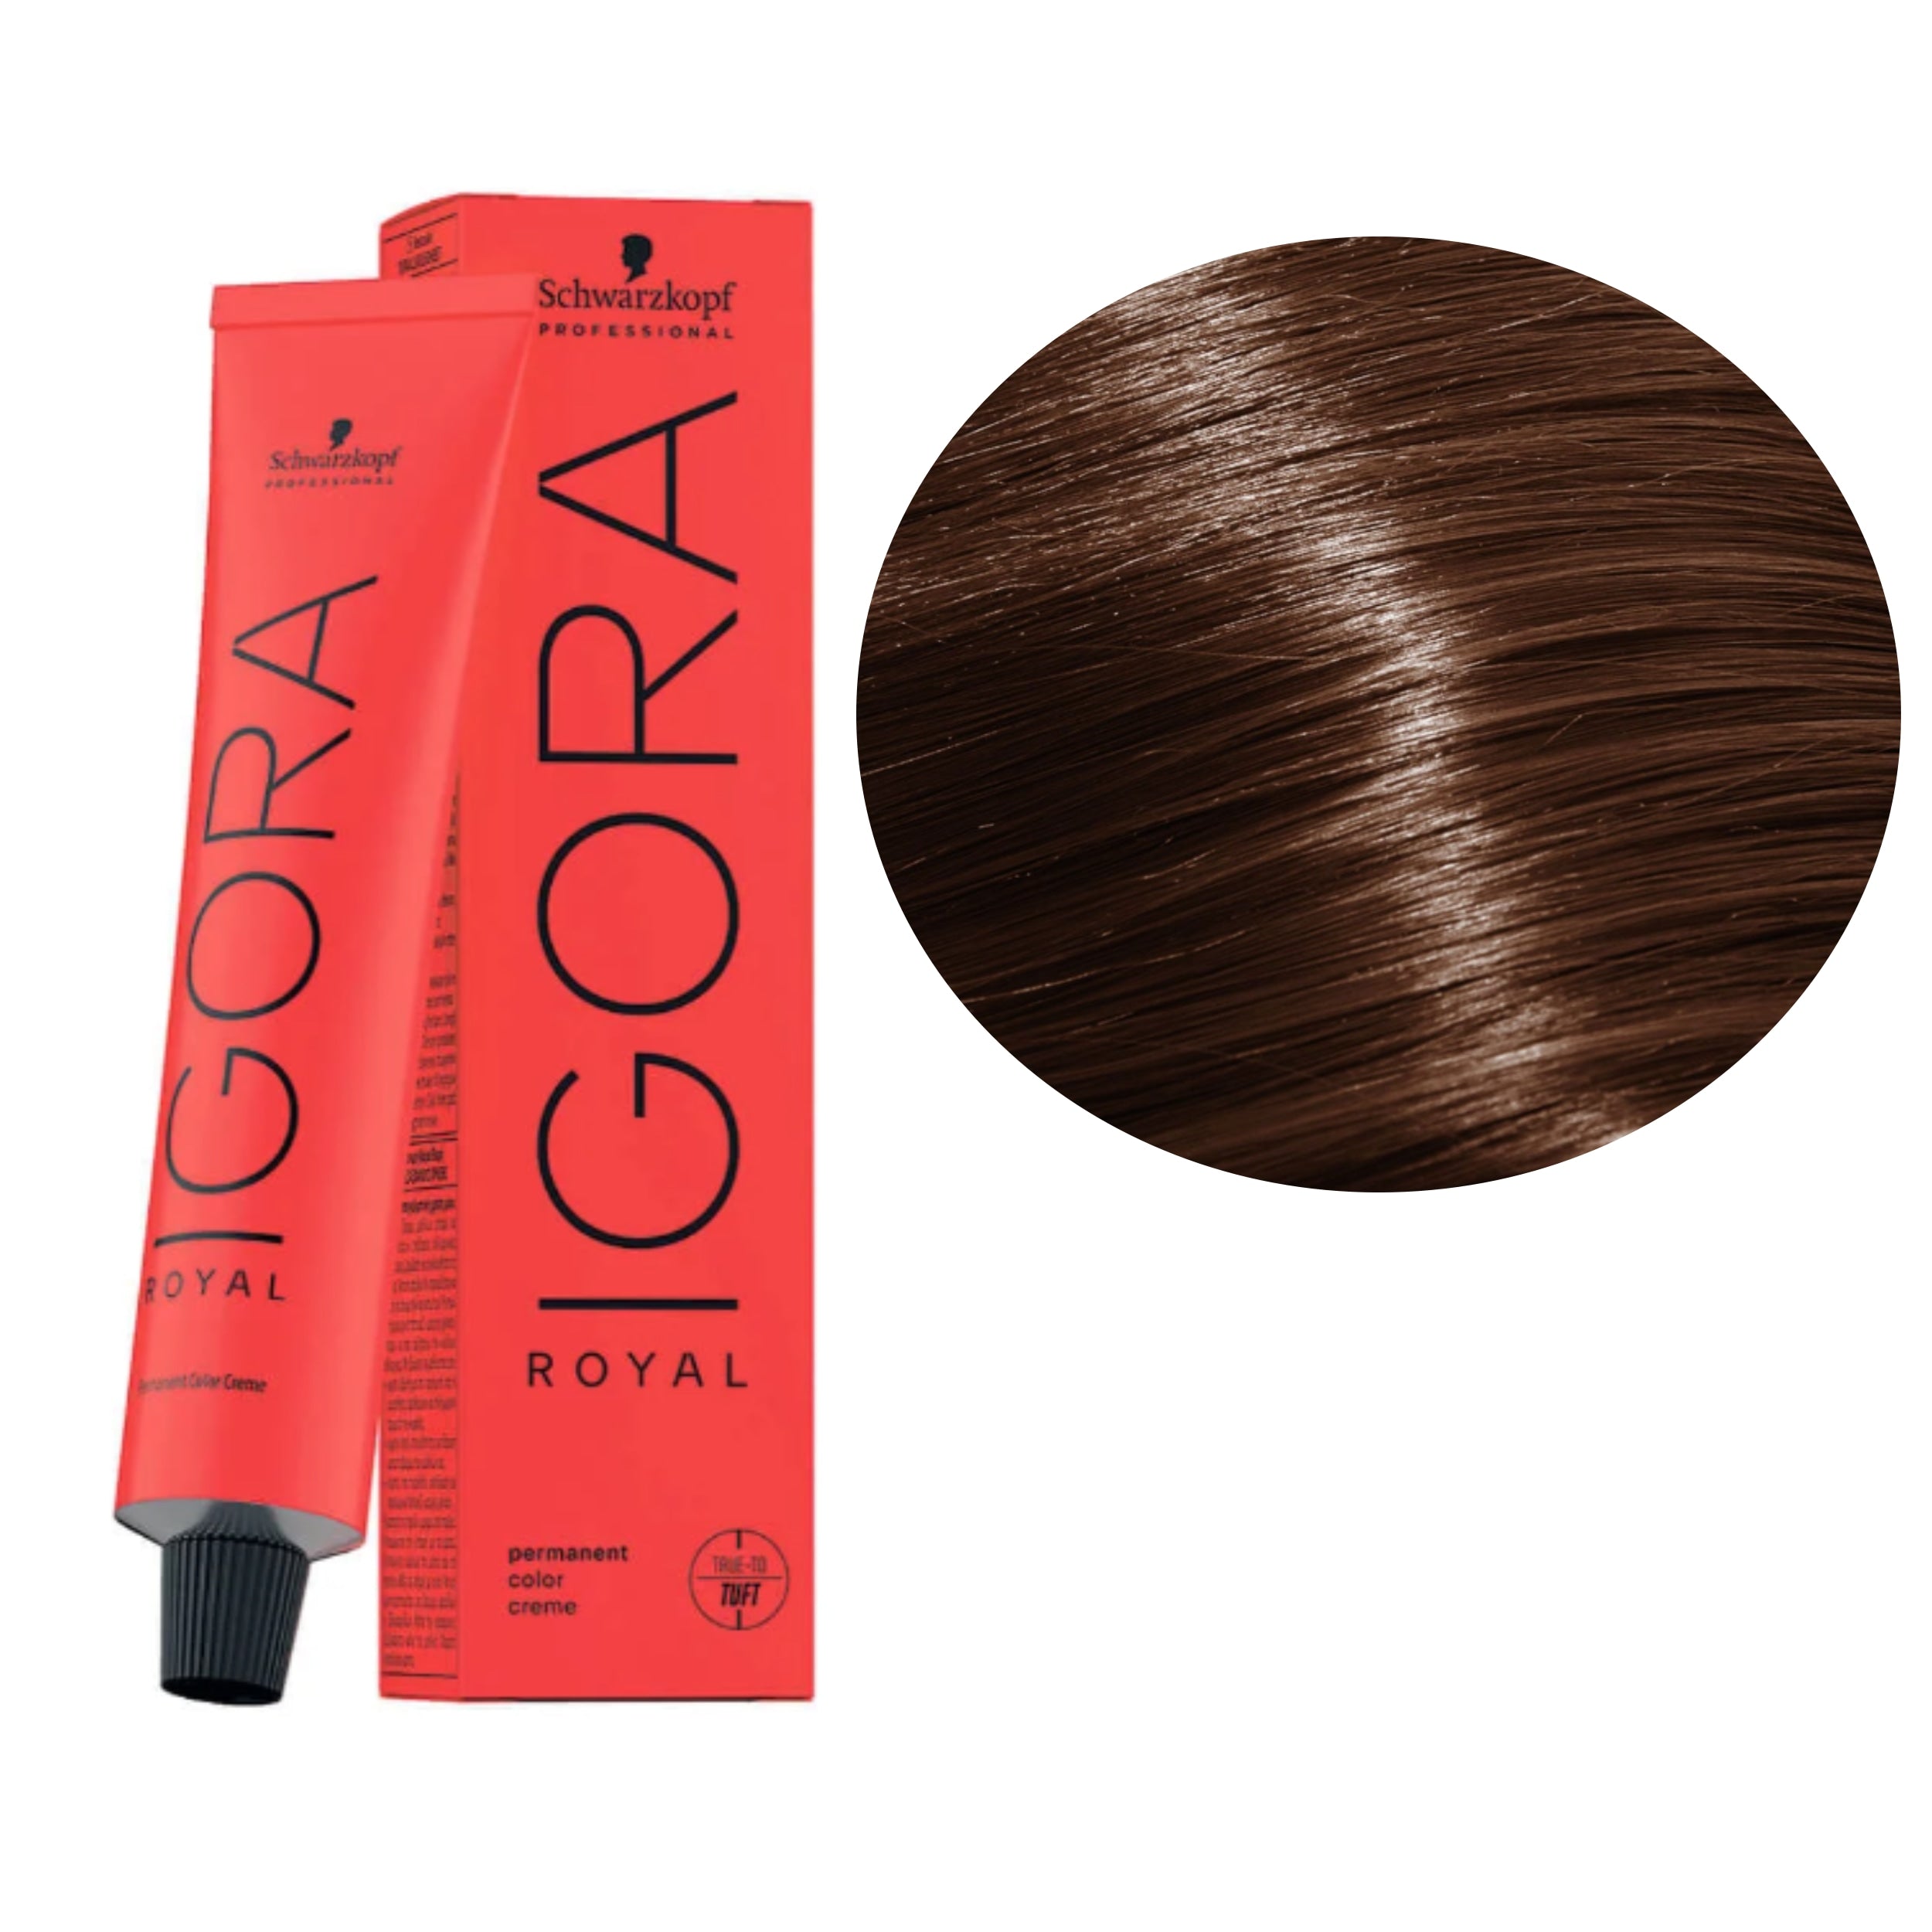 Schwarzkopf Professional Igora Royal Permanent Hair Colour 60ml - beautyhair.co.ukHair Colour